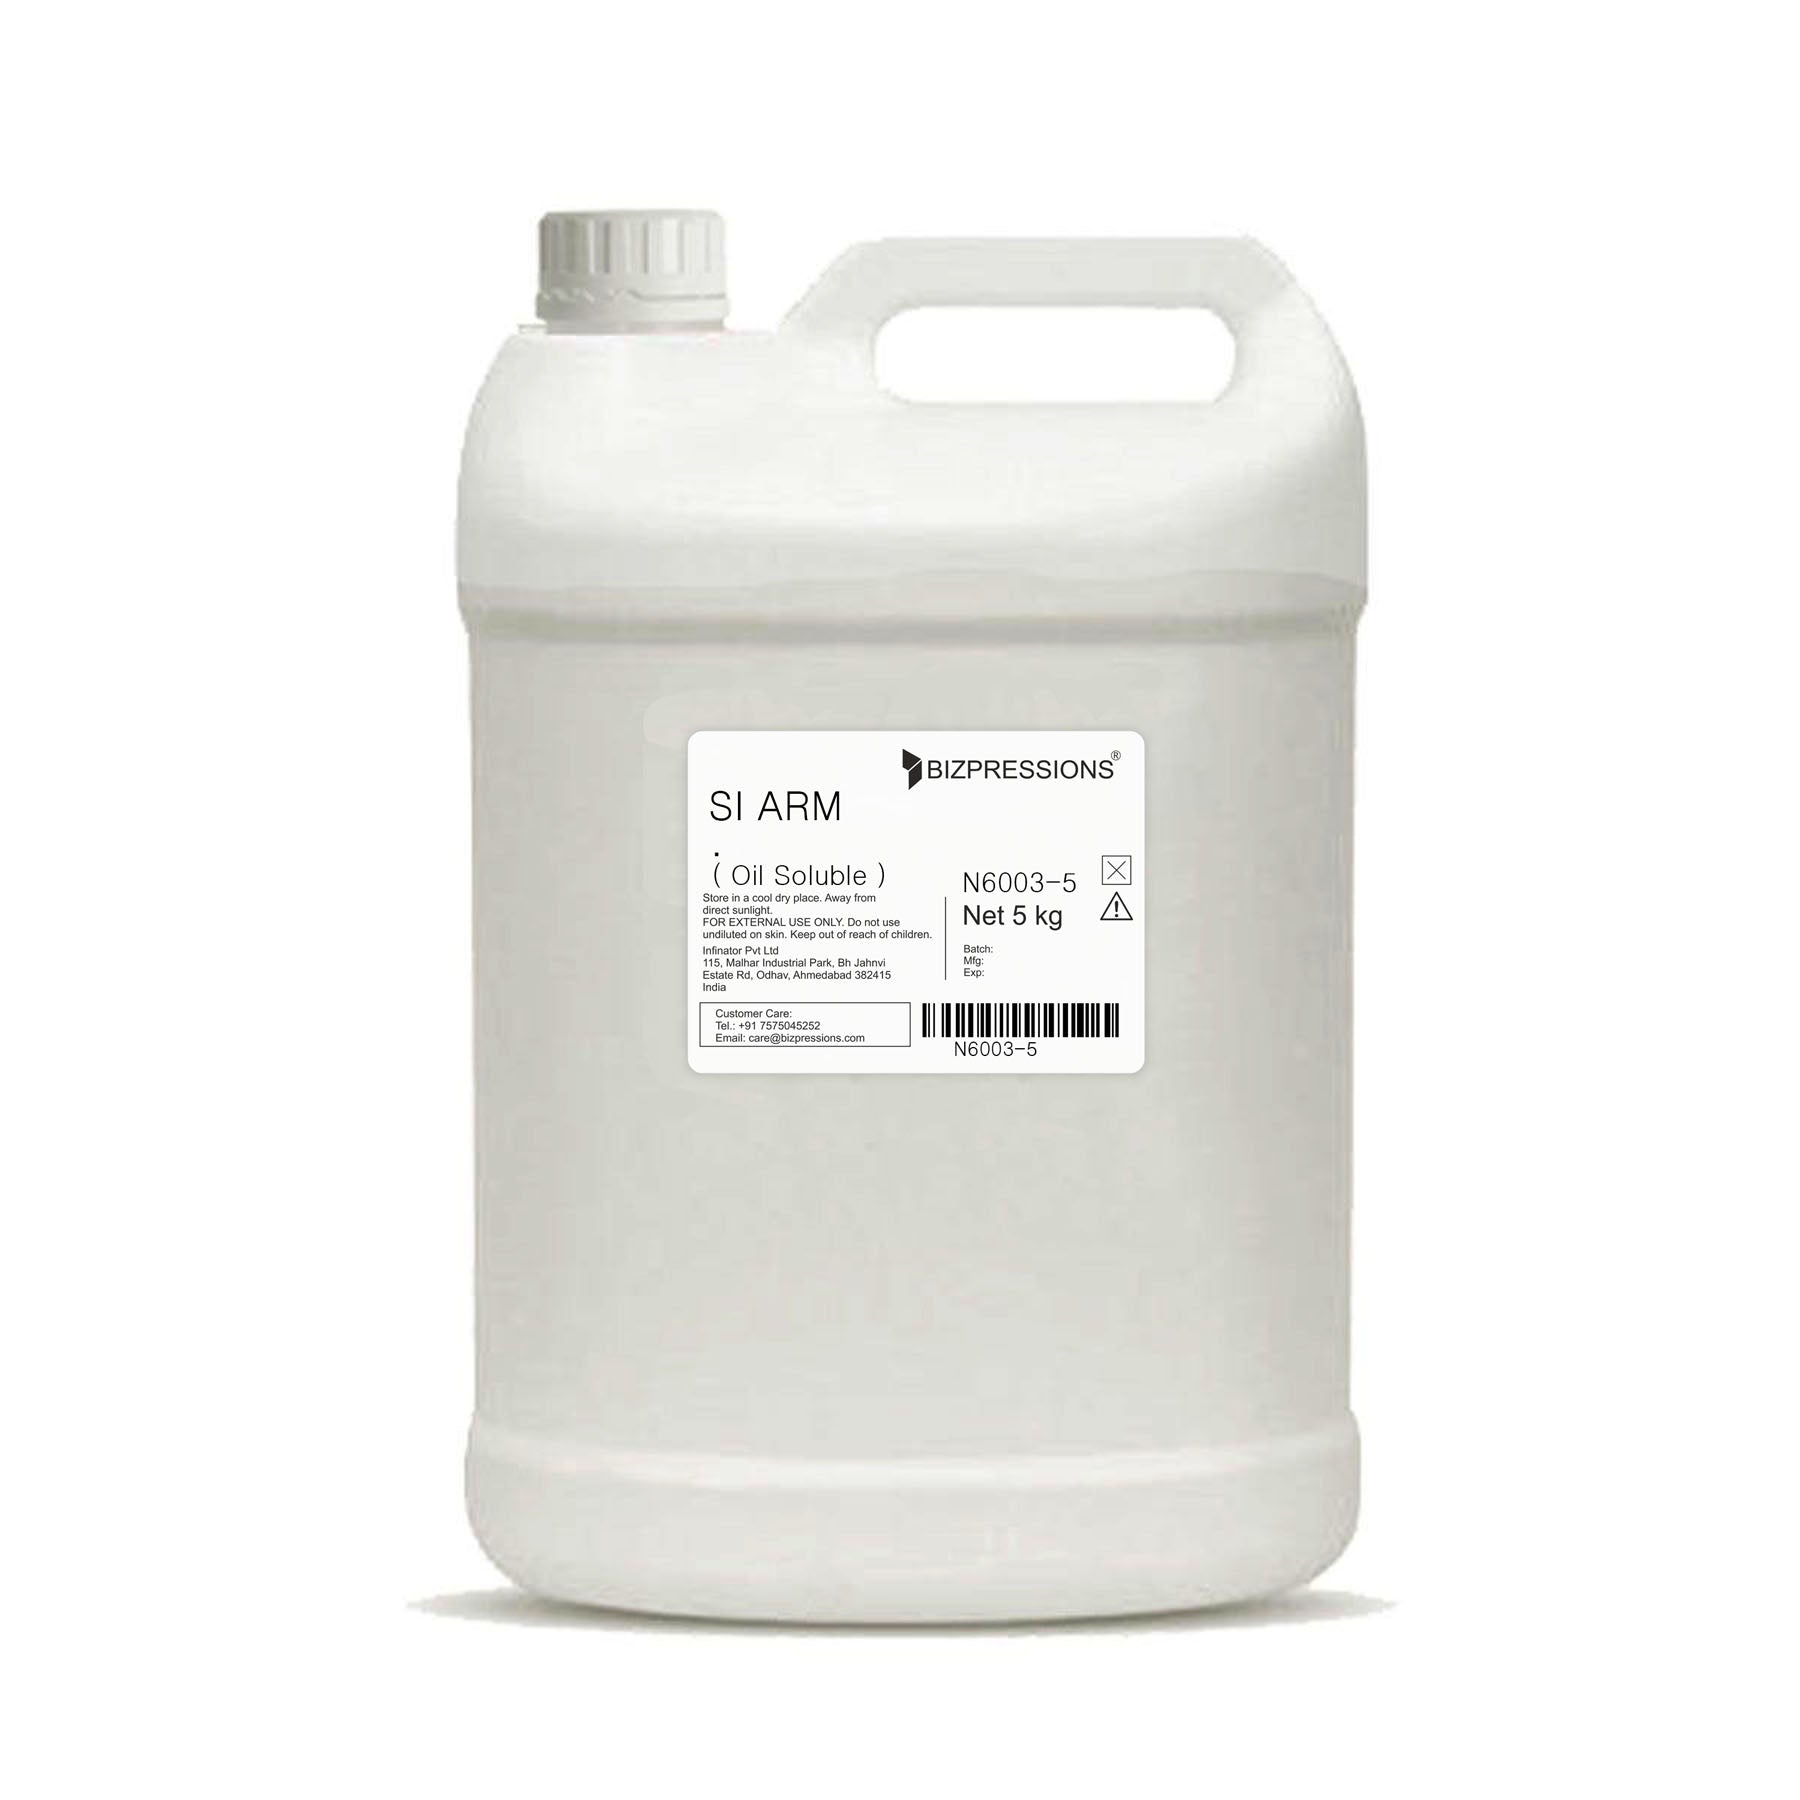 SI ARM - Fragrance ( Oil Soluble ) - 5 kg